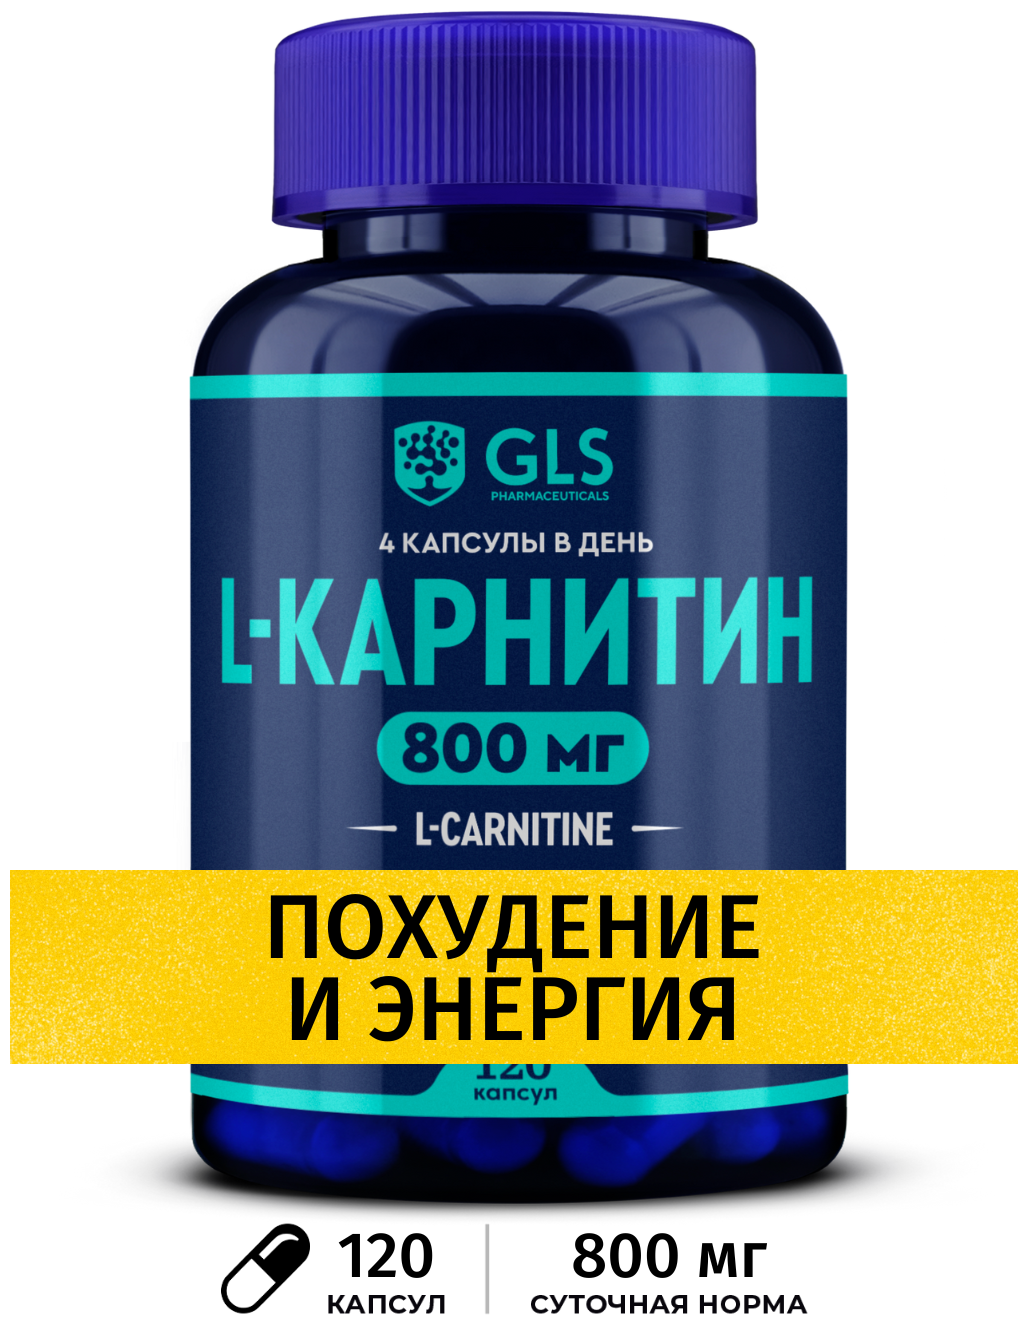 GLS pharmaceuticals L-карнитин